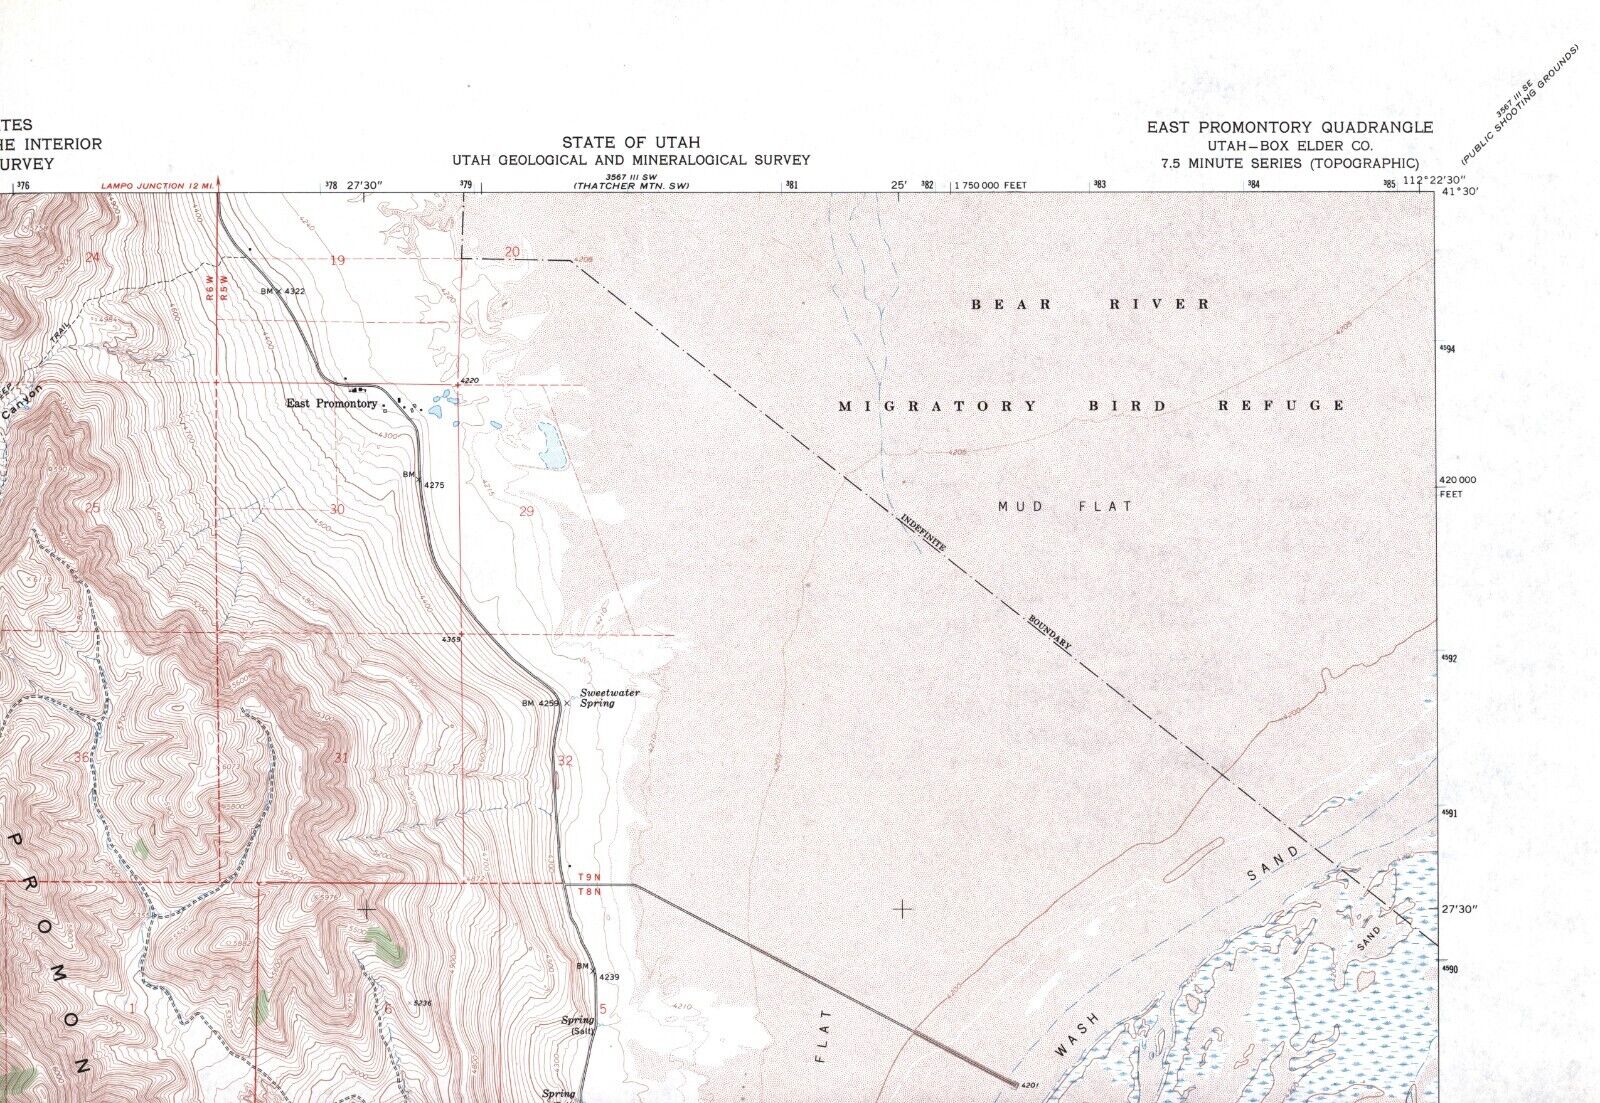 East Promontory, Utah 1967 Vintage USGS Topo Map 7.5 Quadrangle - Shaded